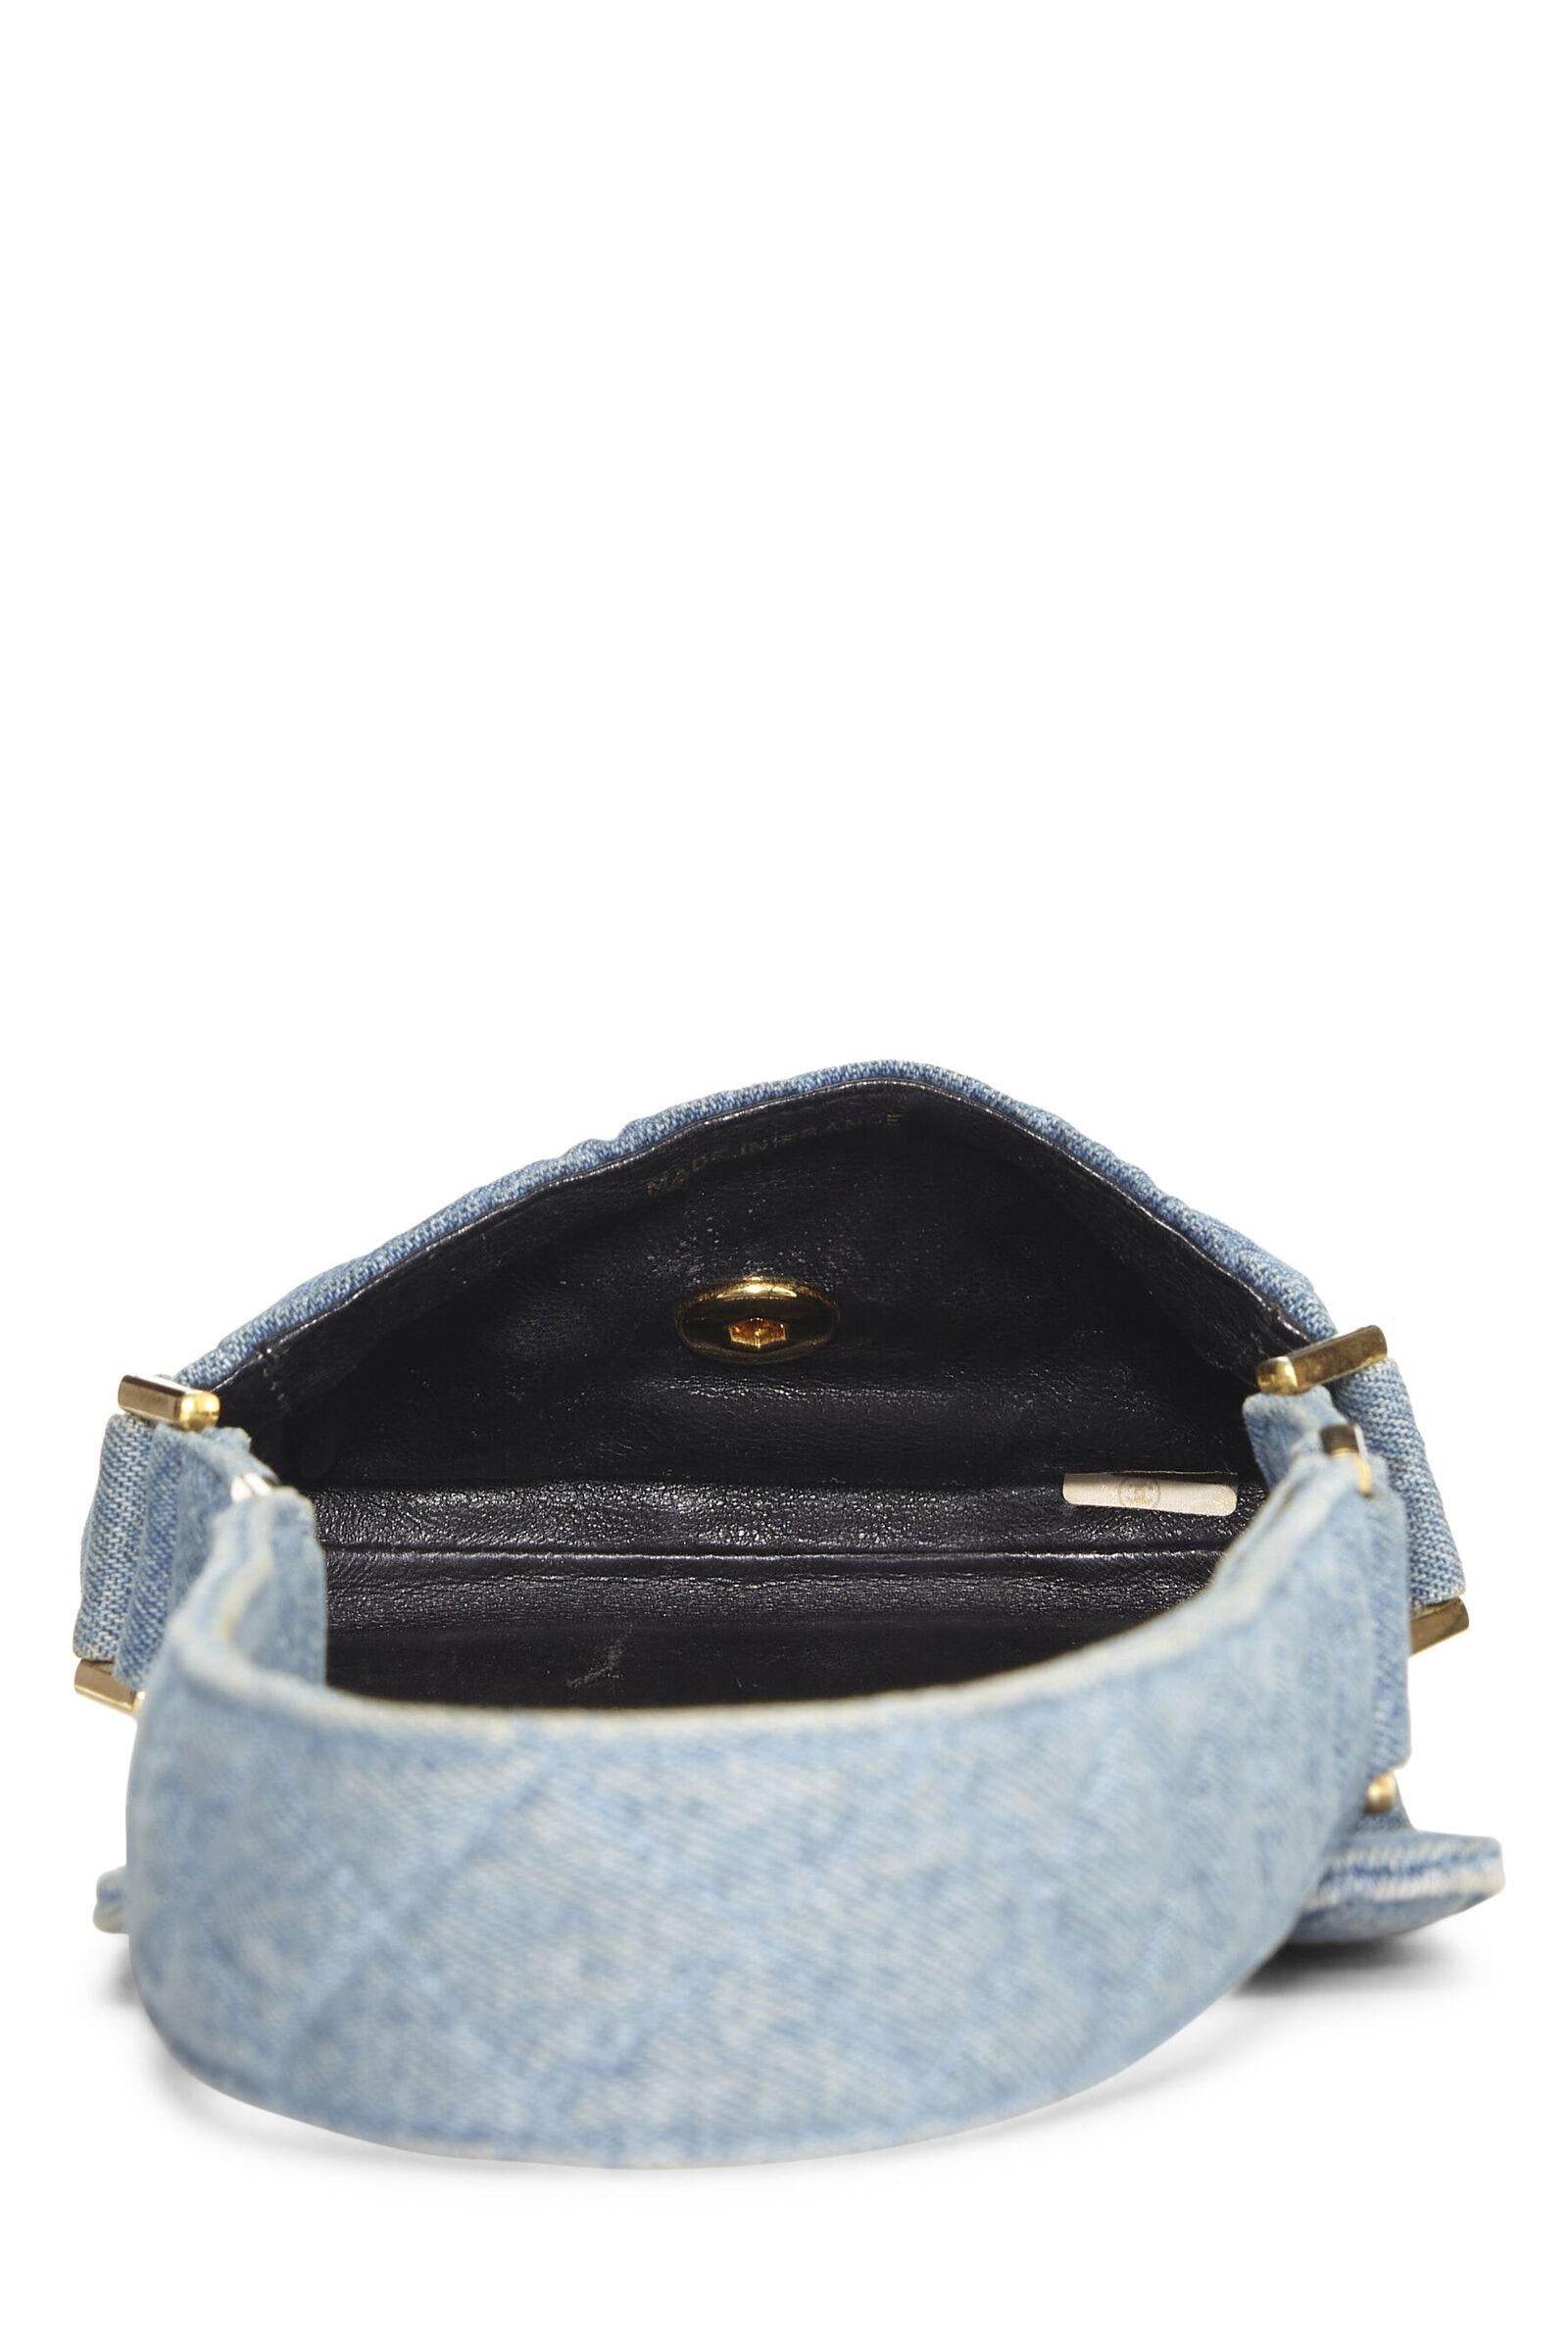 Chanel 1989 Vintage Runway Blue Jean Denim Micro Mini Classic Flap Bag For Sale 1